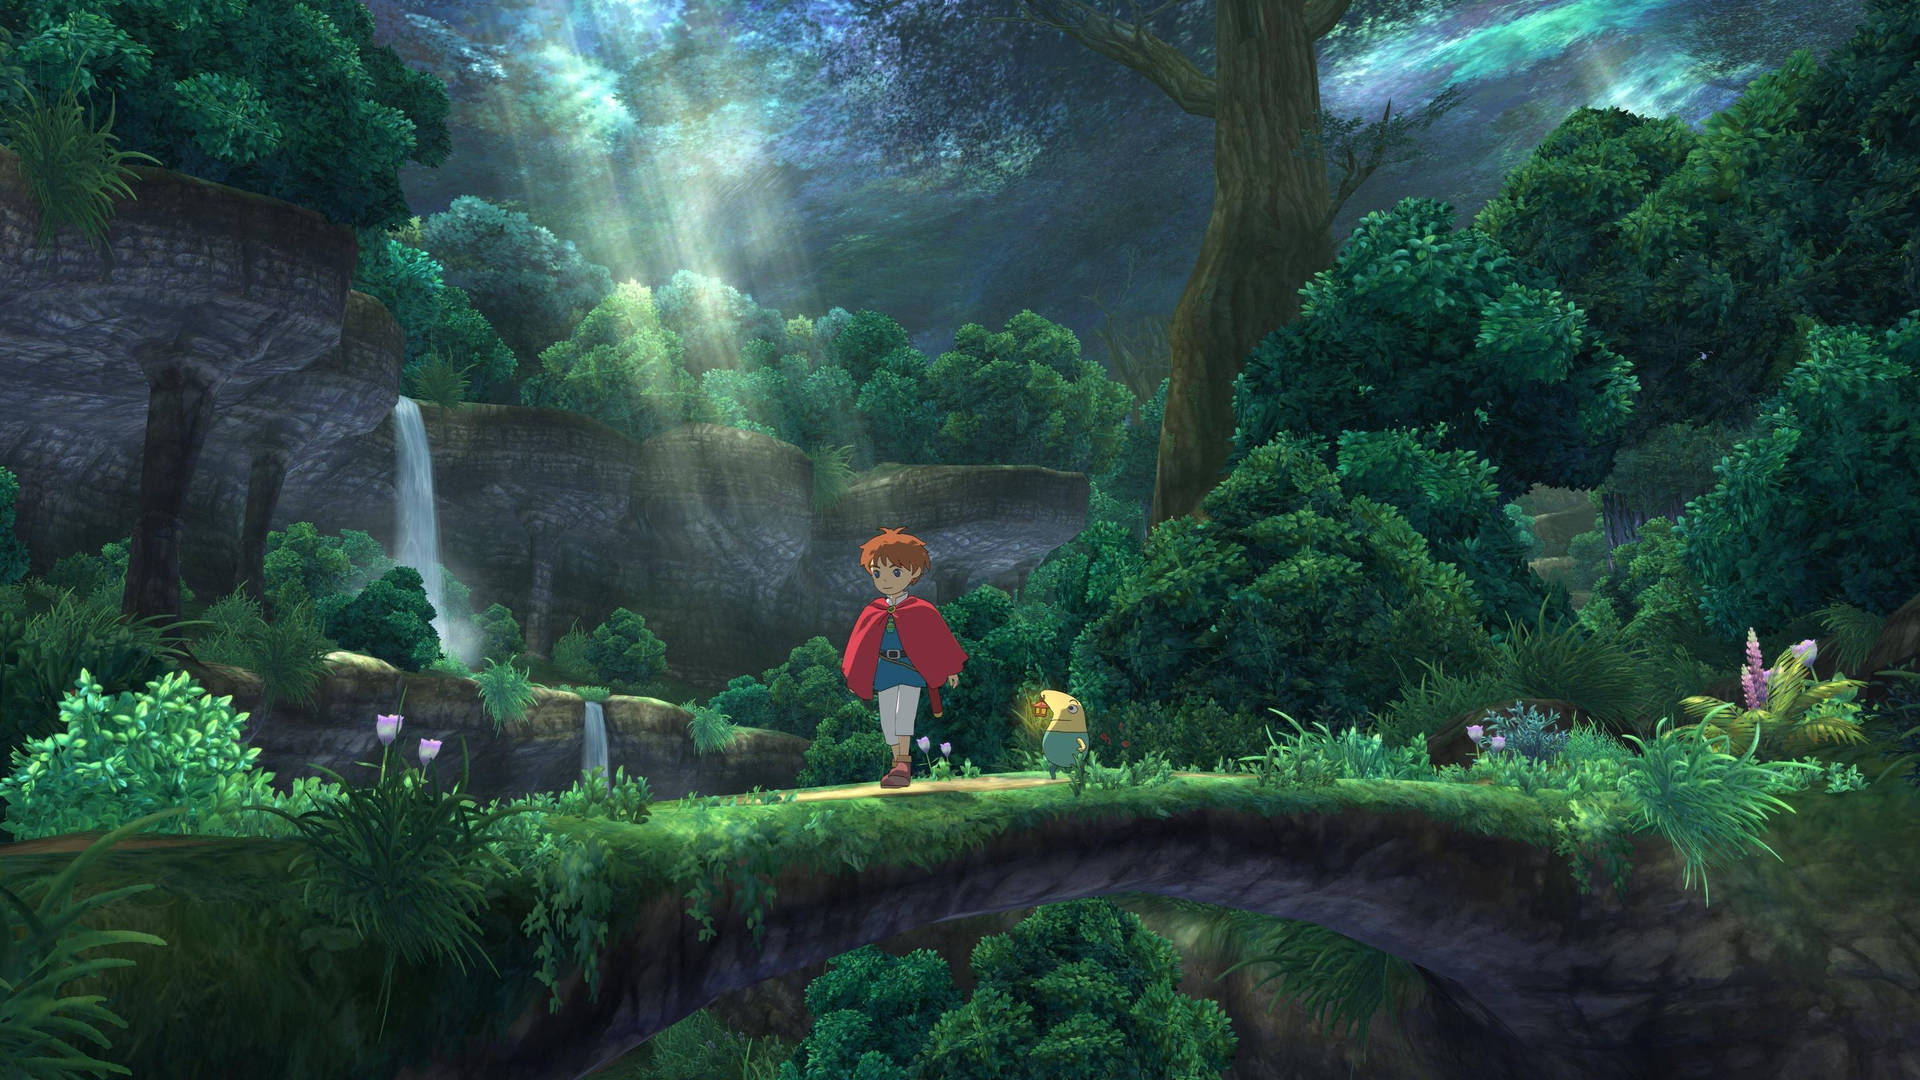 Studio Ghibli 2900X1632 Wallpaper and Background Image